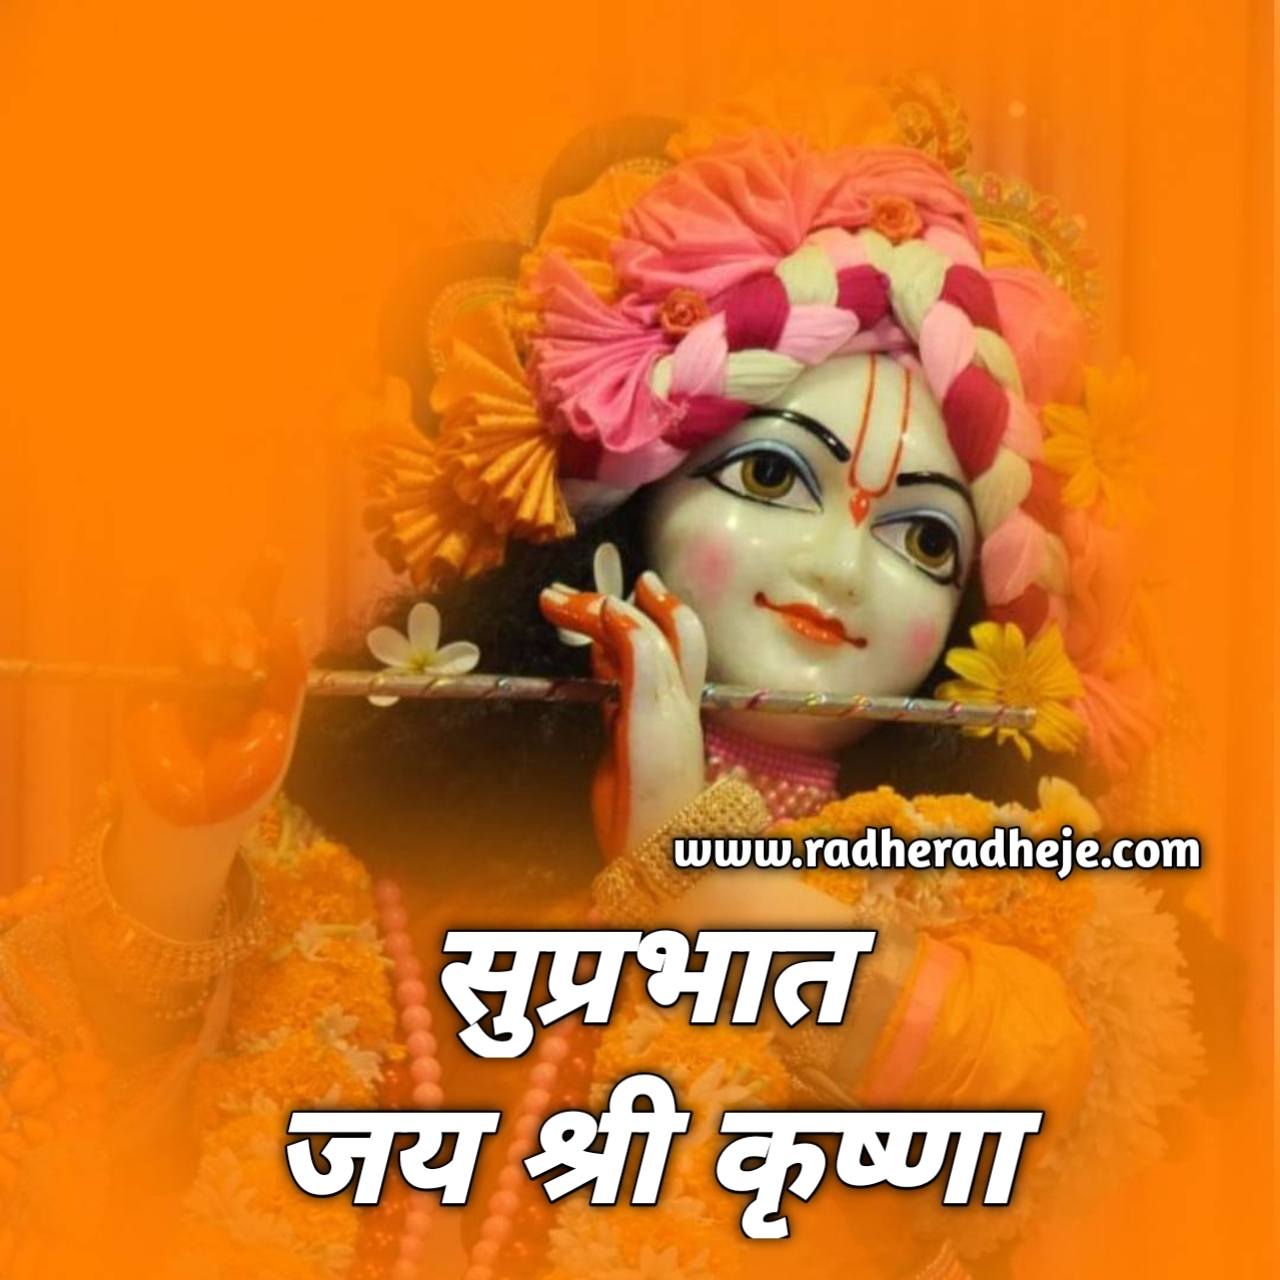 Best Good Morning image Jai Shri Krishna image - RadheRadheje